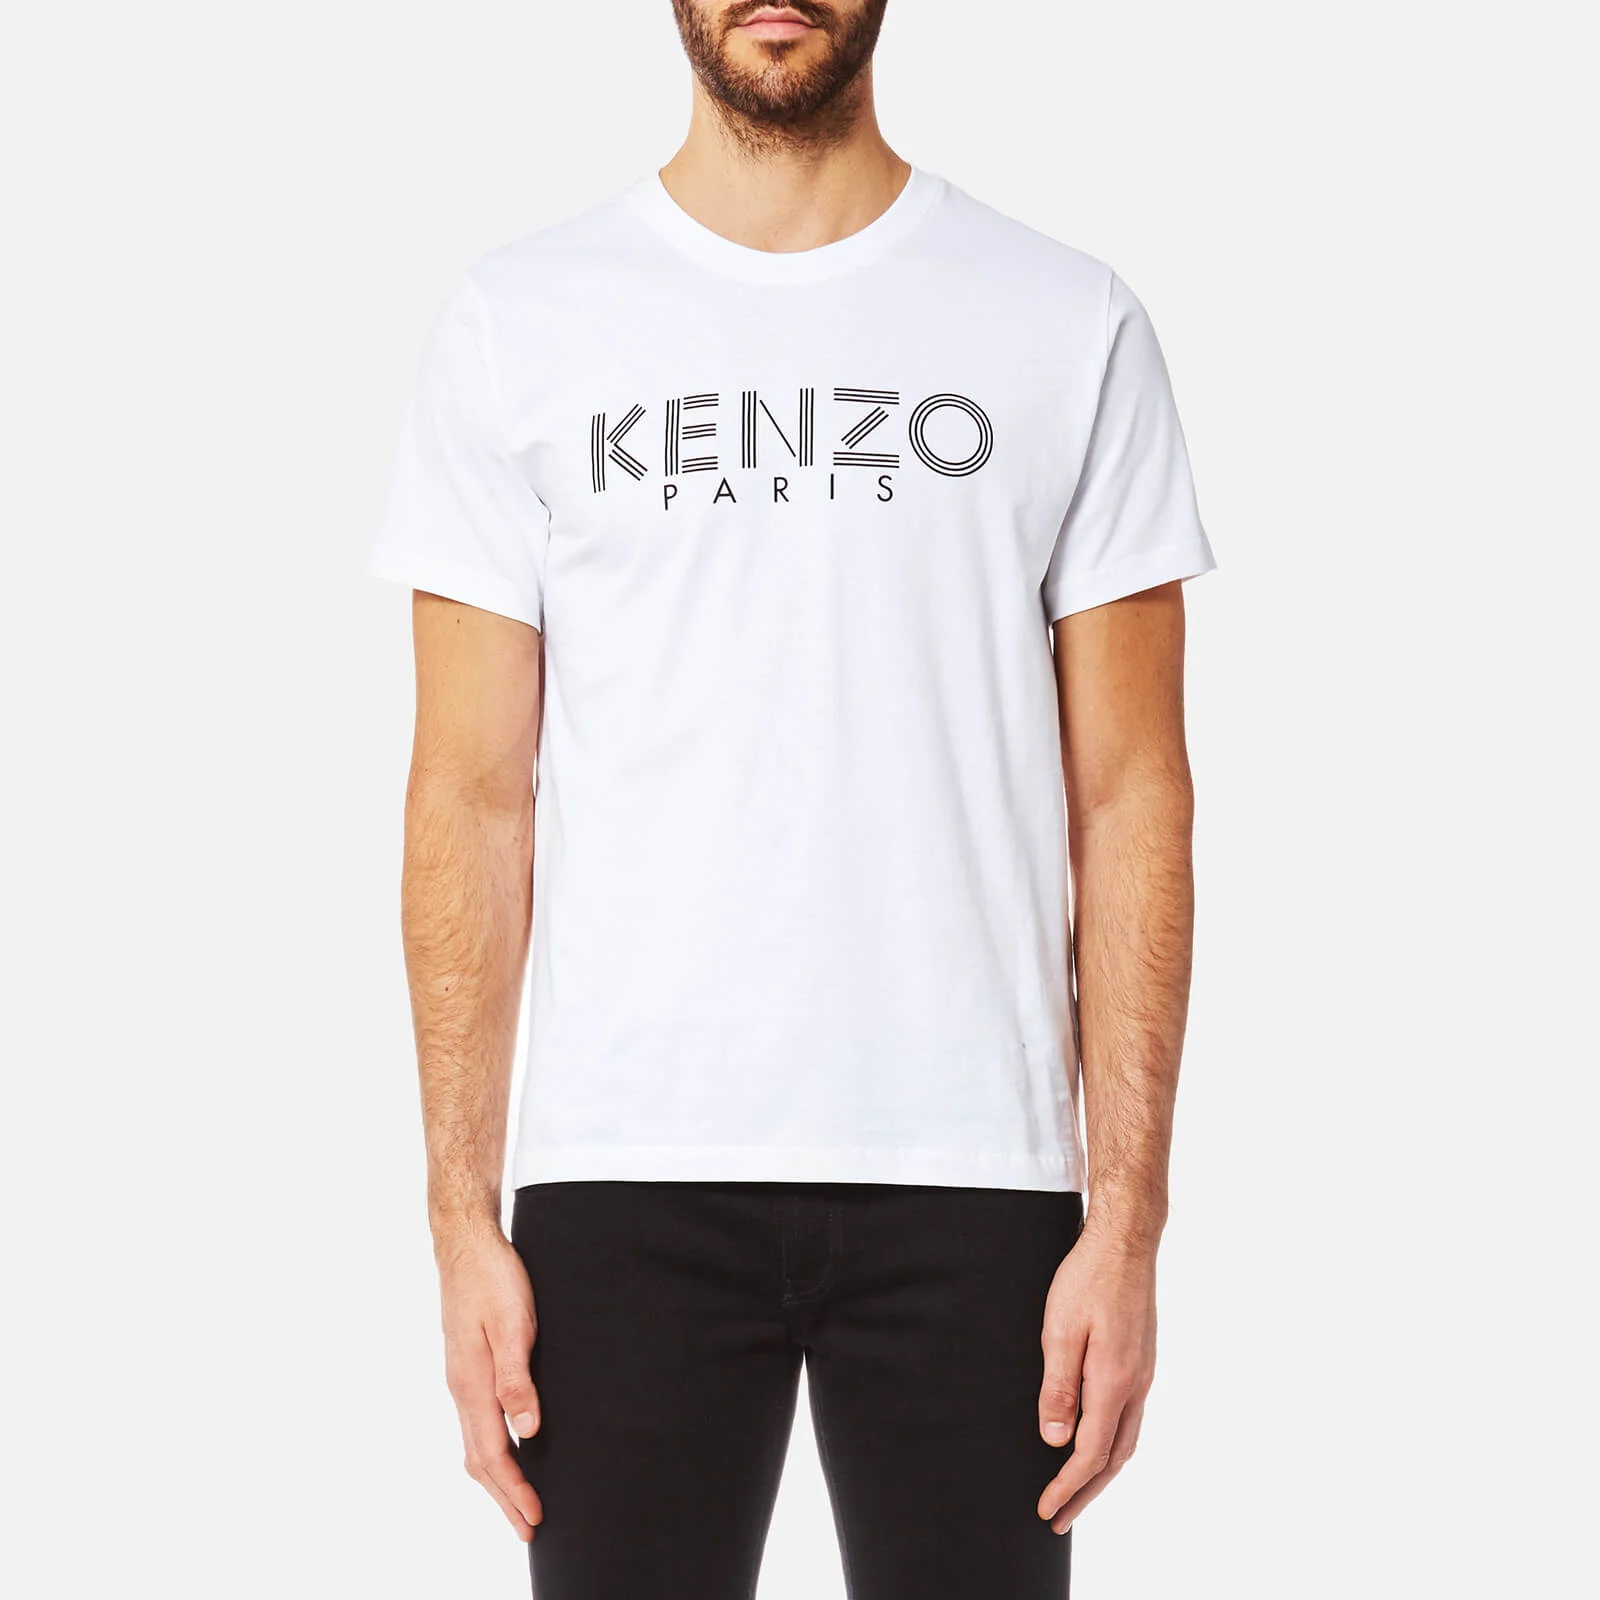 KENZO Men's KENZO Paris T-Shirt - White Image 1